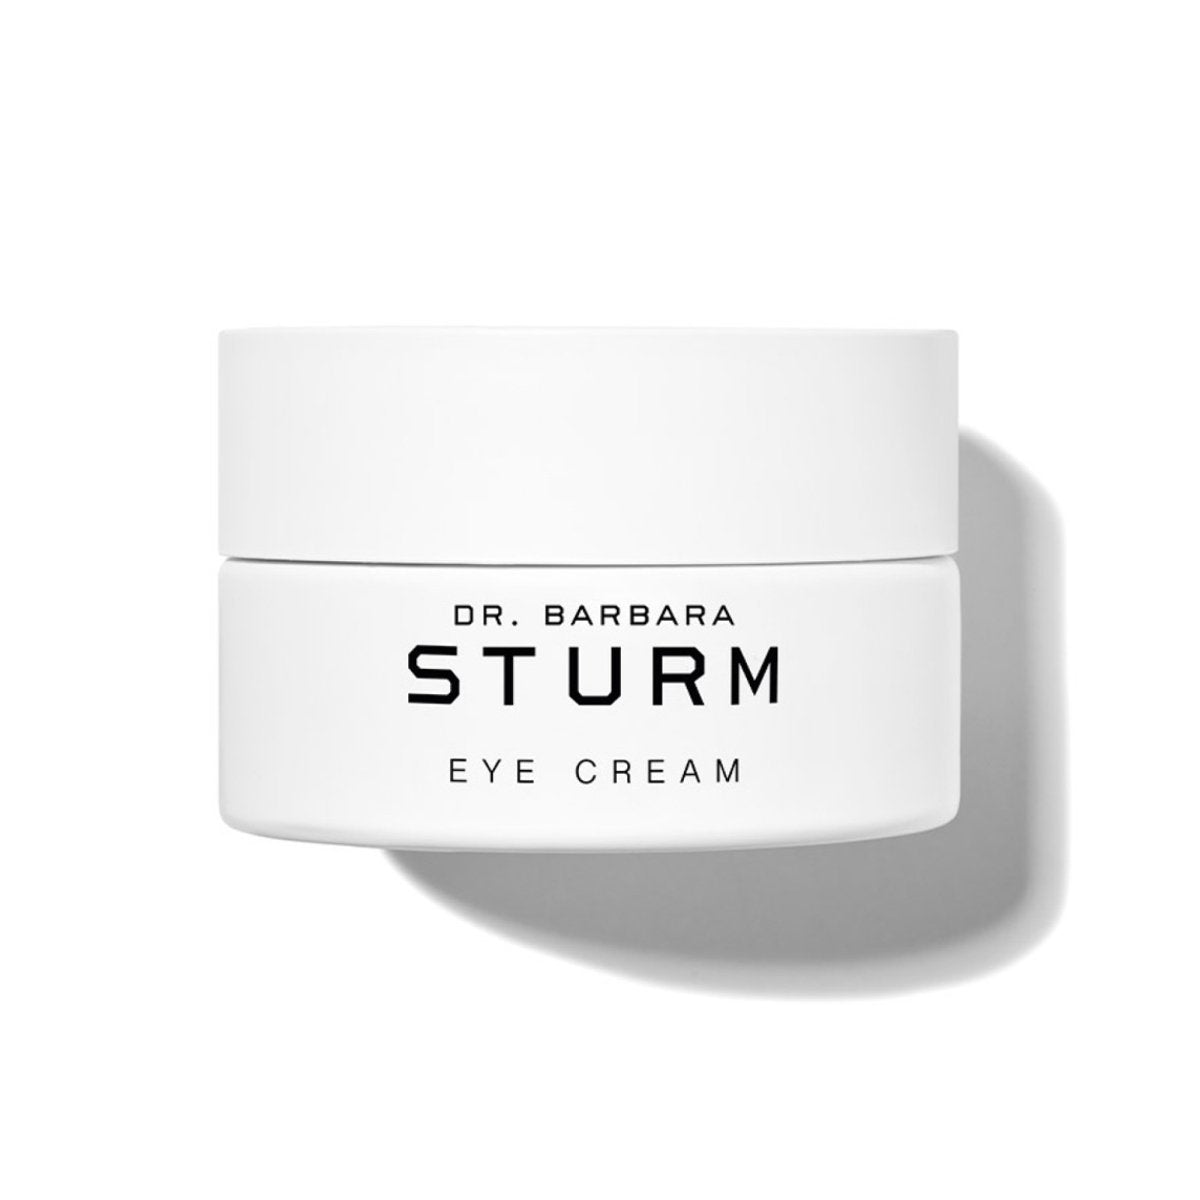 Dr. Barbara Sturm Eye Cream - SkincareEssentials